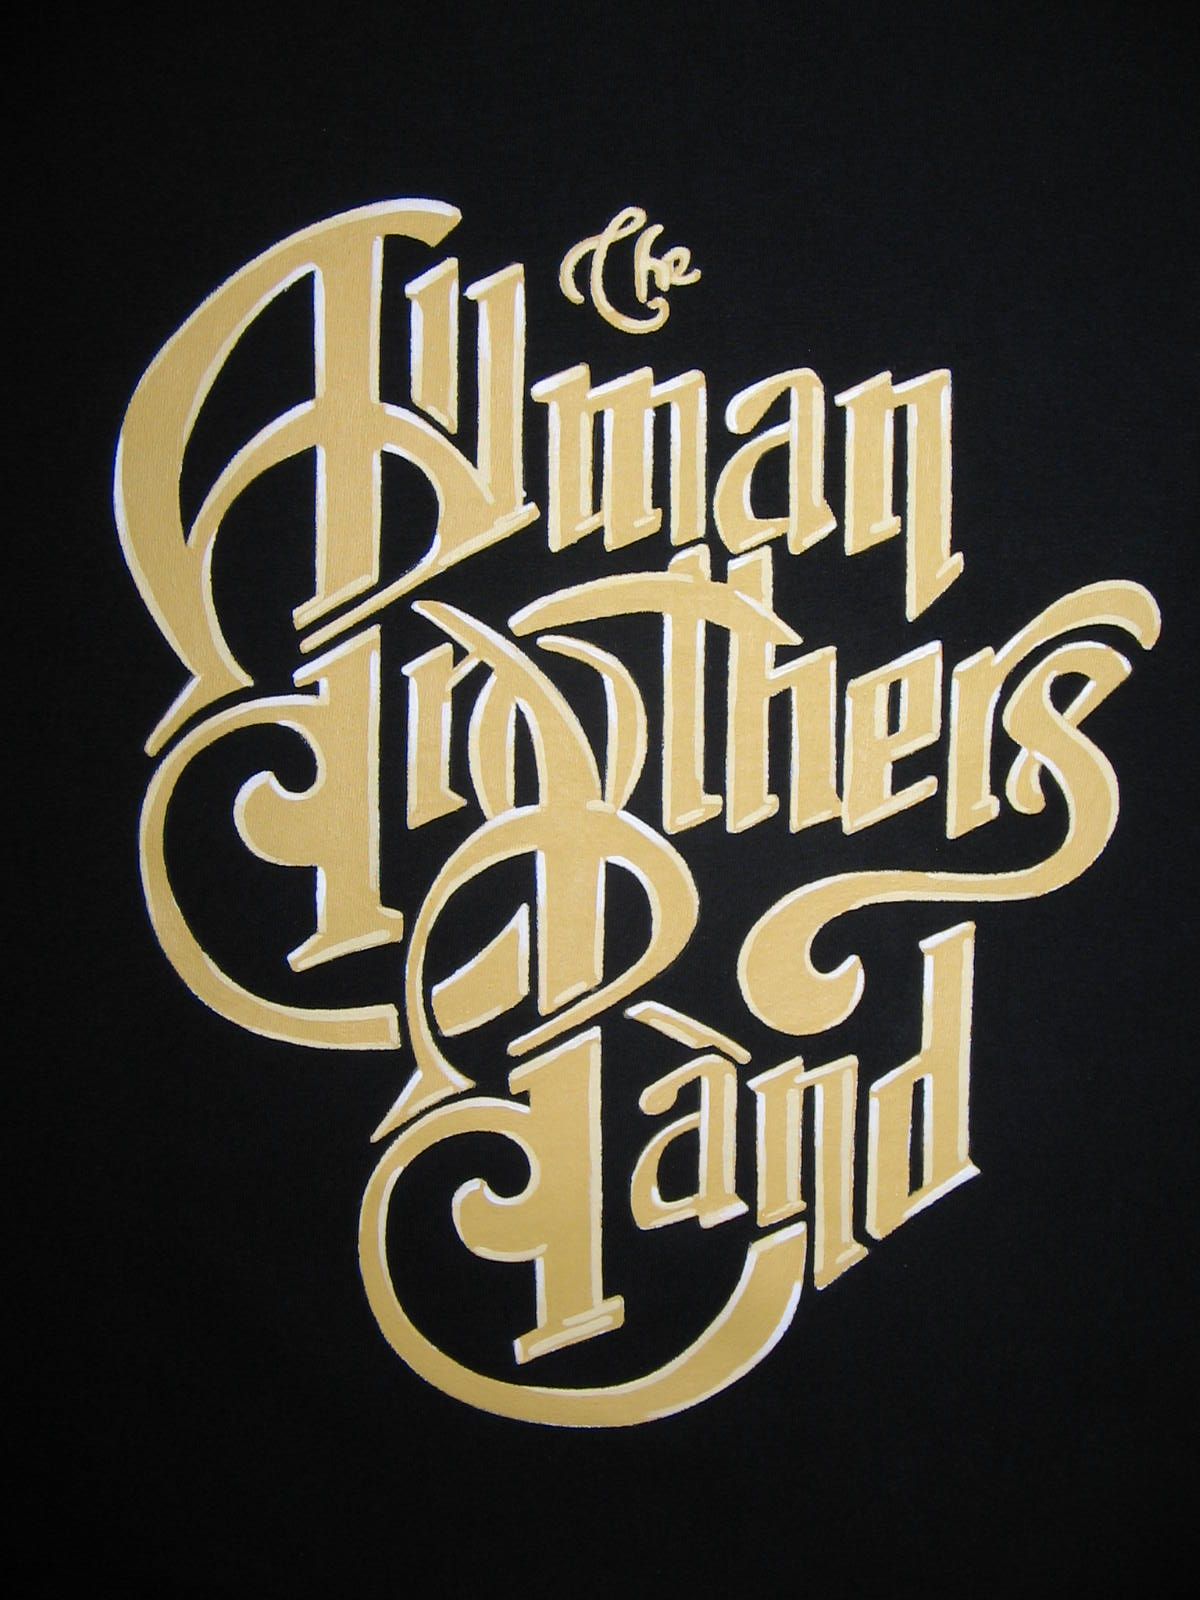 Allman brothers Logos